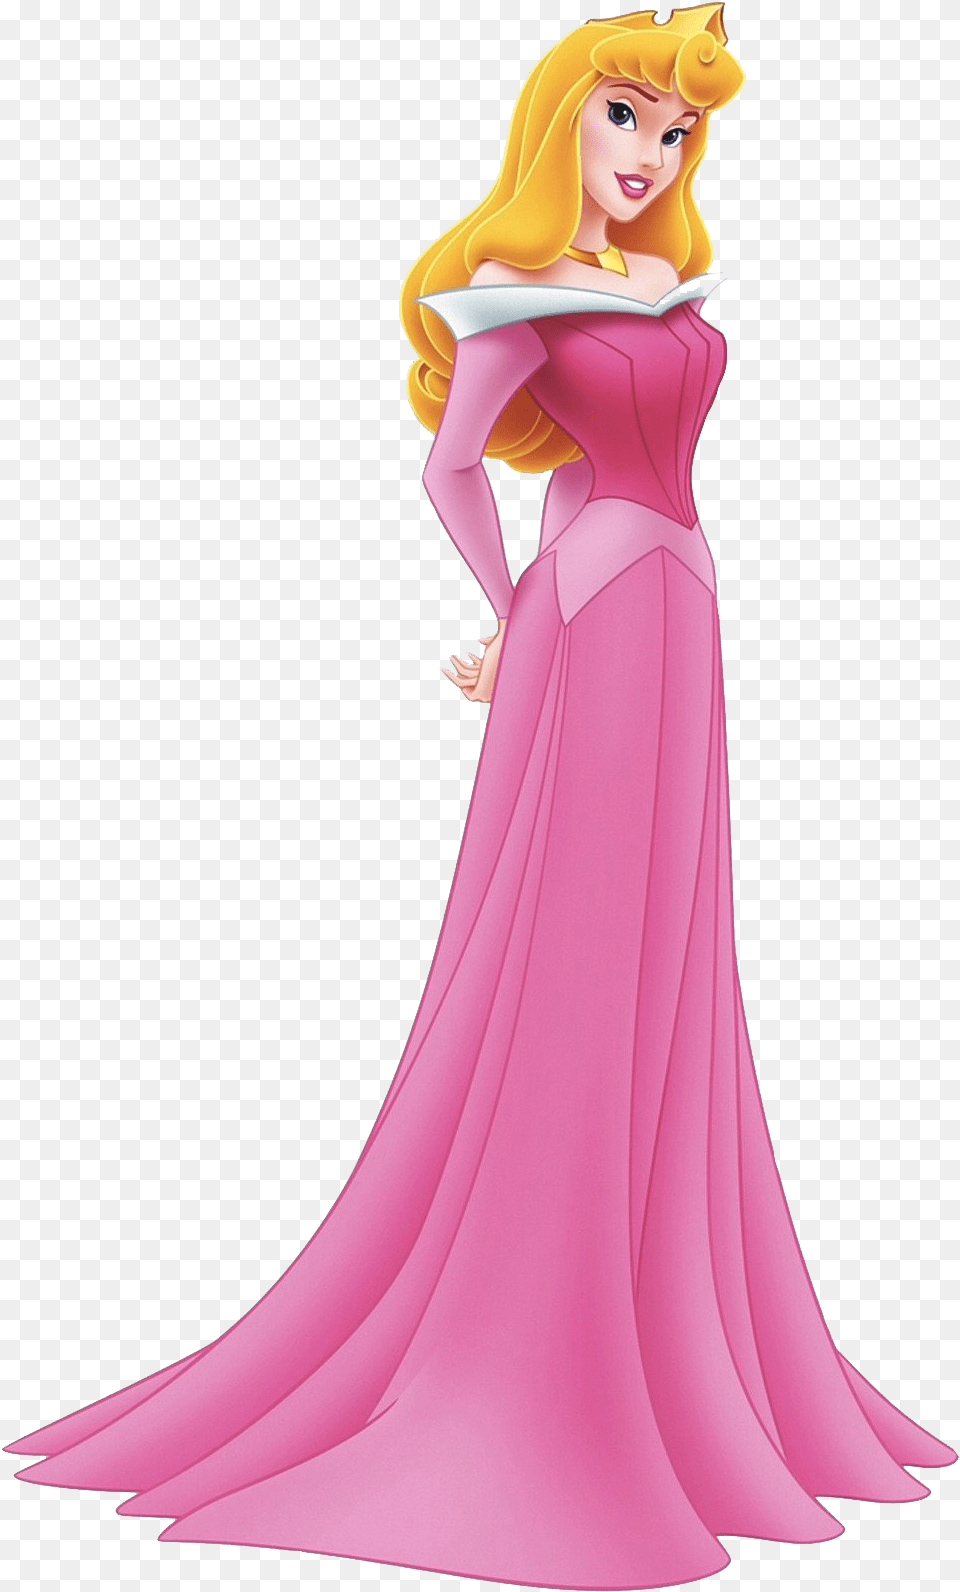 Princess Aurora Free Princess Cartoon Sleeping Beauty, Clothing, Dress, Gown, Fashion Png